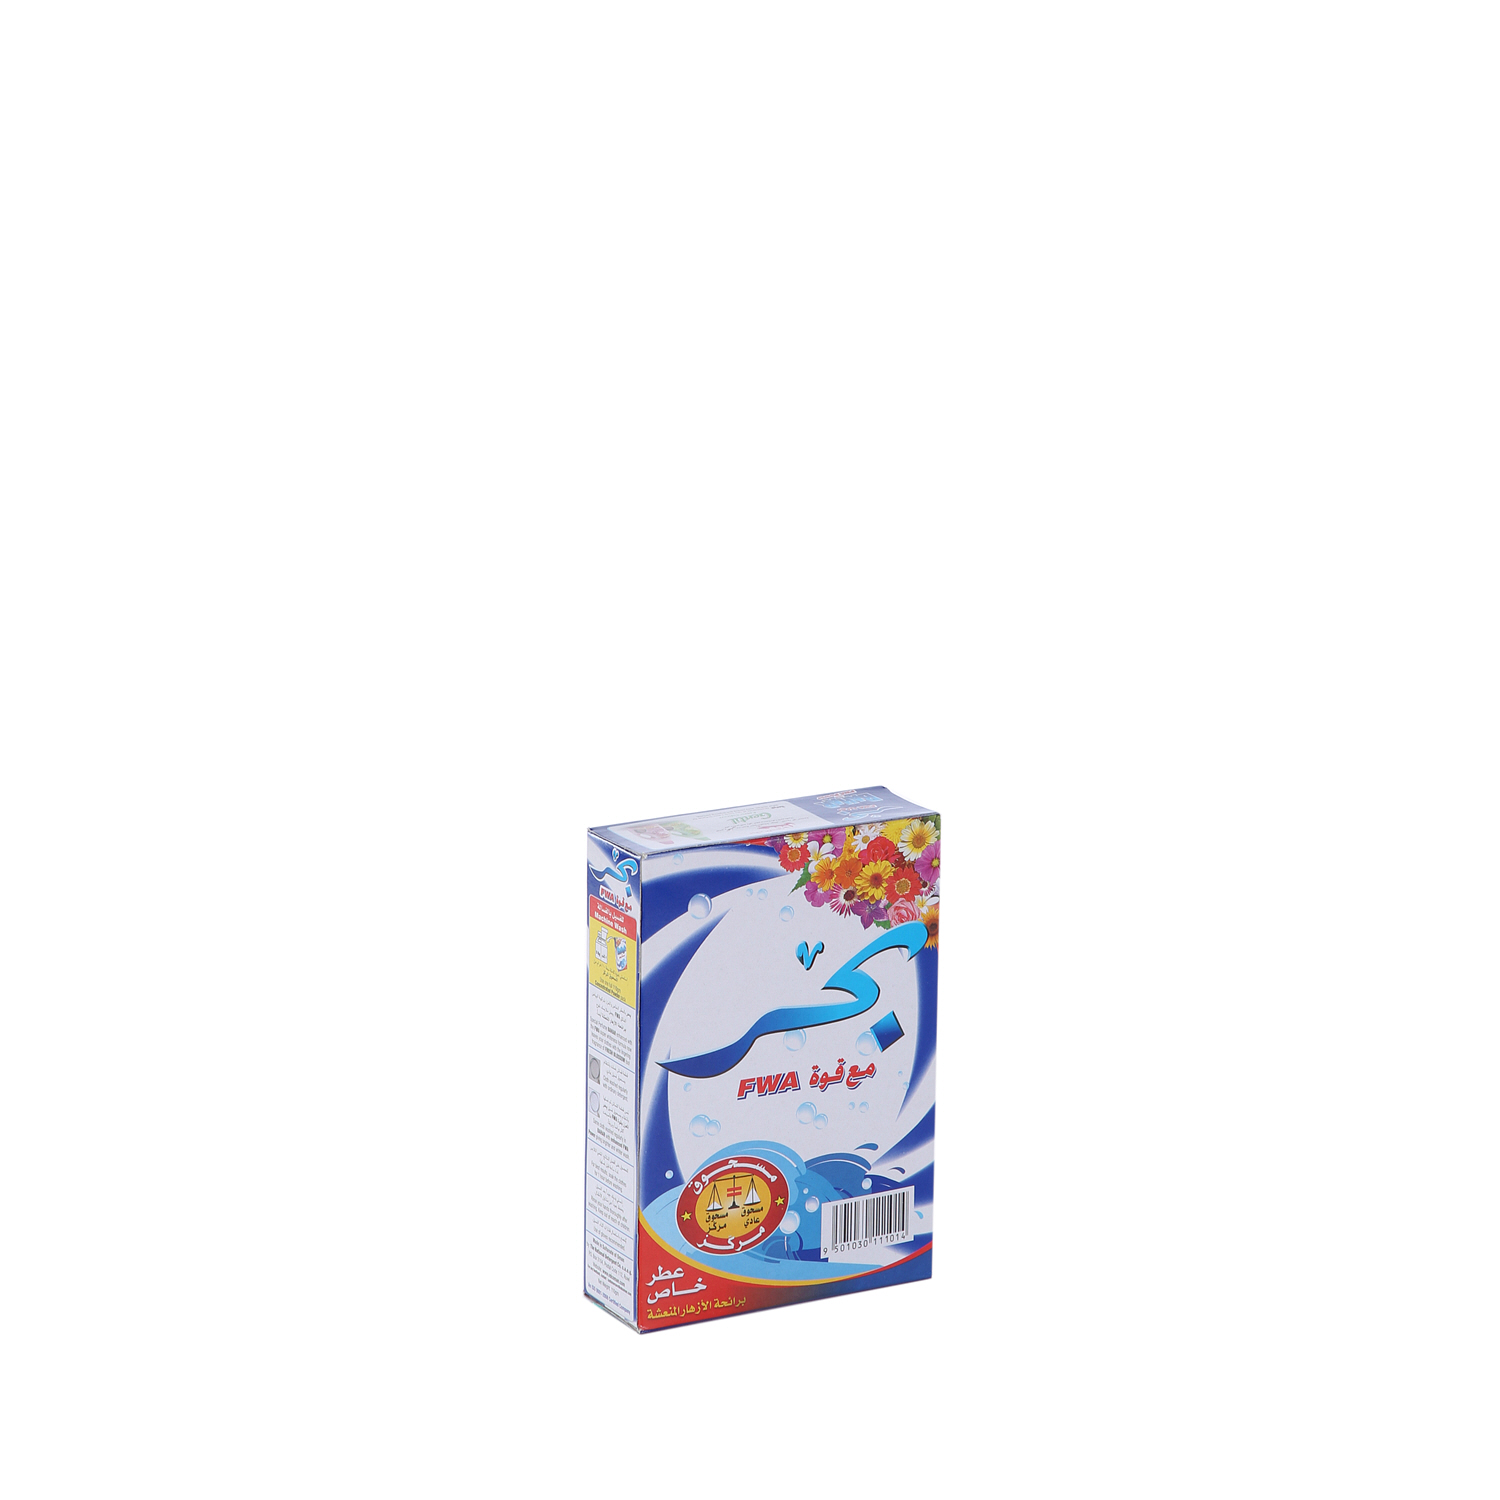 Bahar Detergent Powder Fresh Blossom 120 g